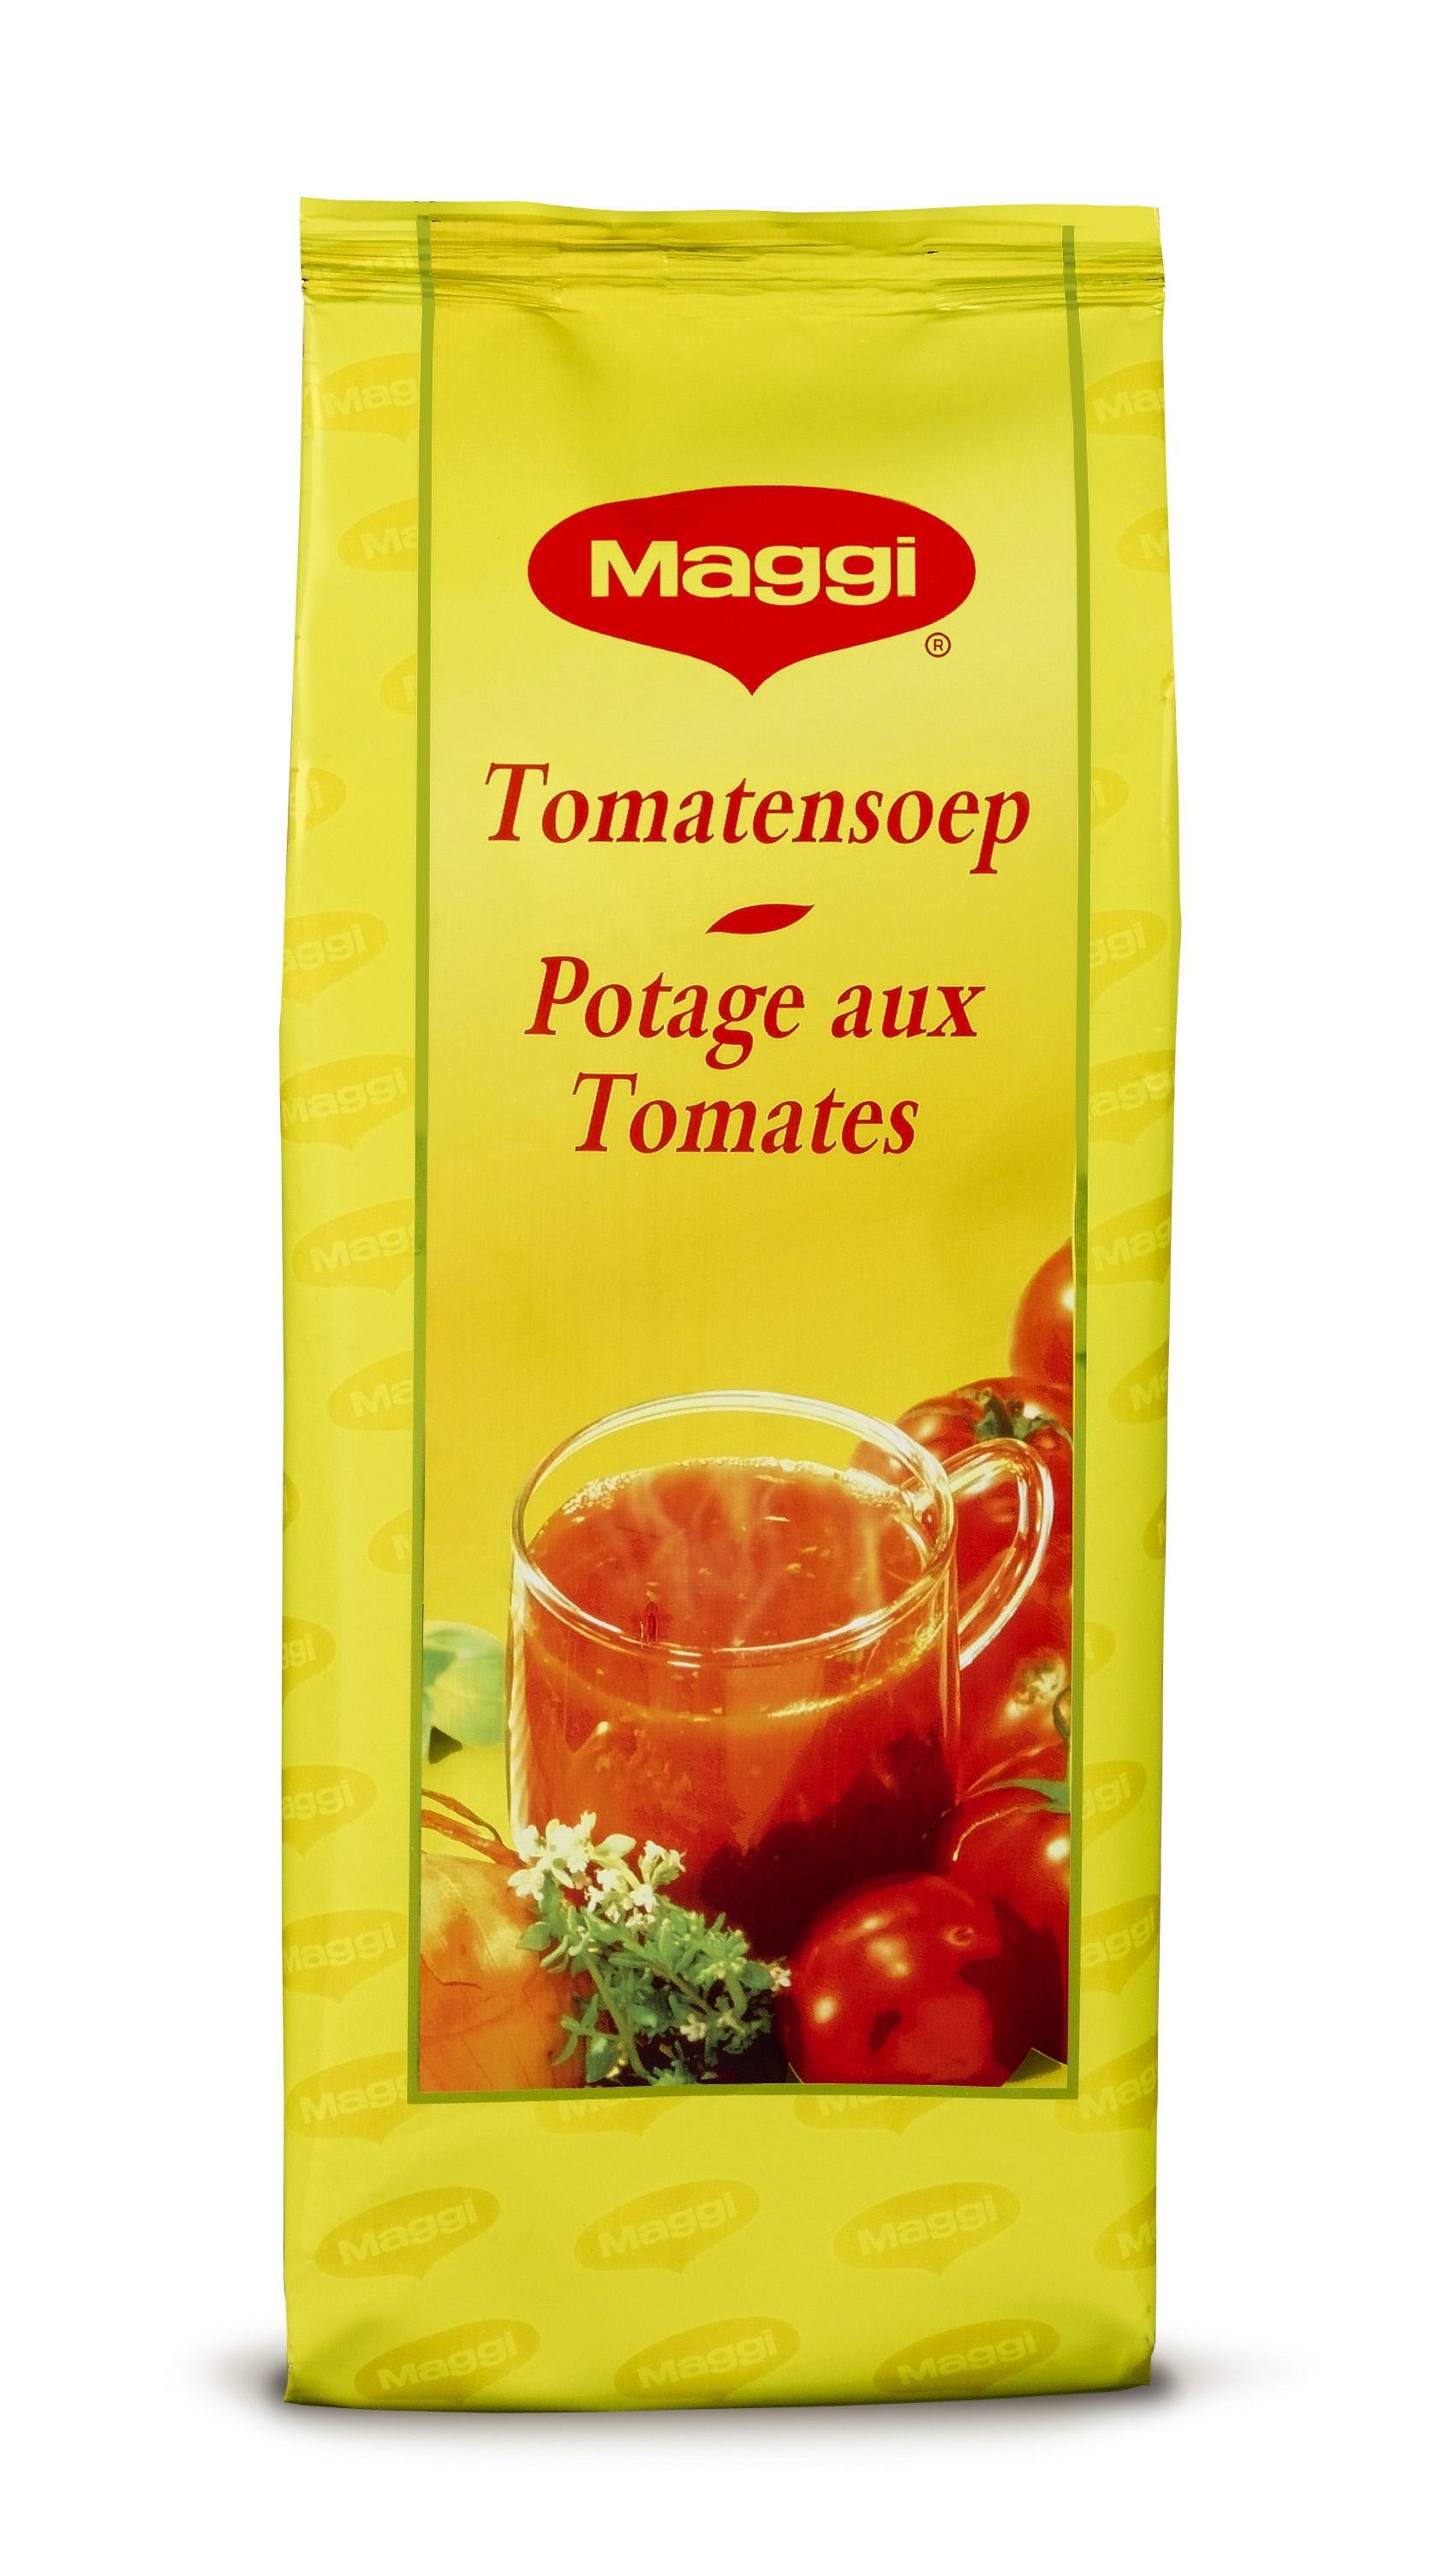 Nestlé Maggi tomatensoep Vending 6x1kg